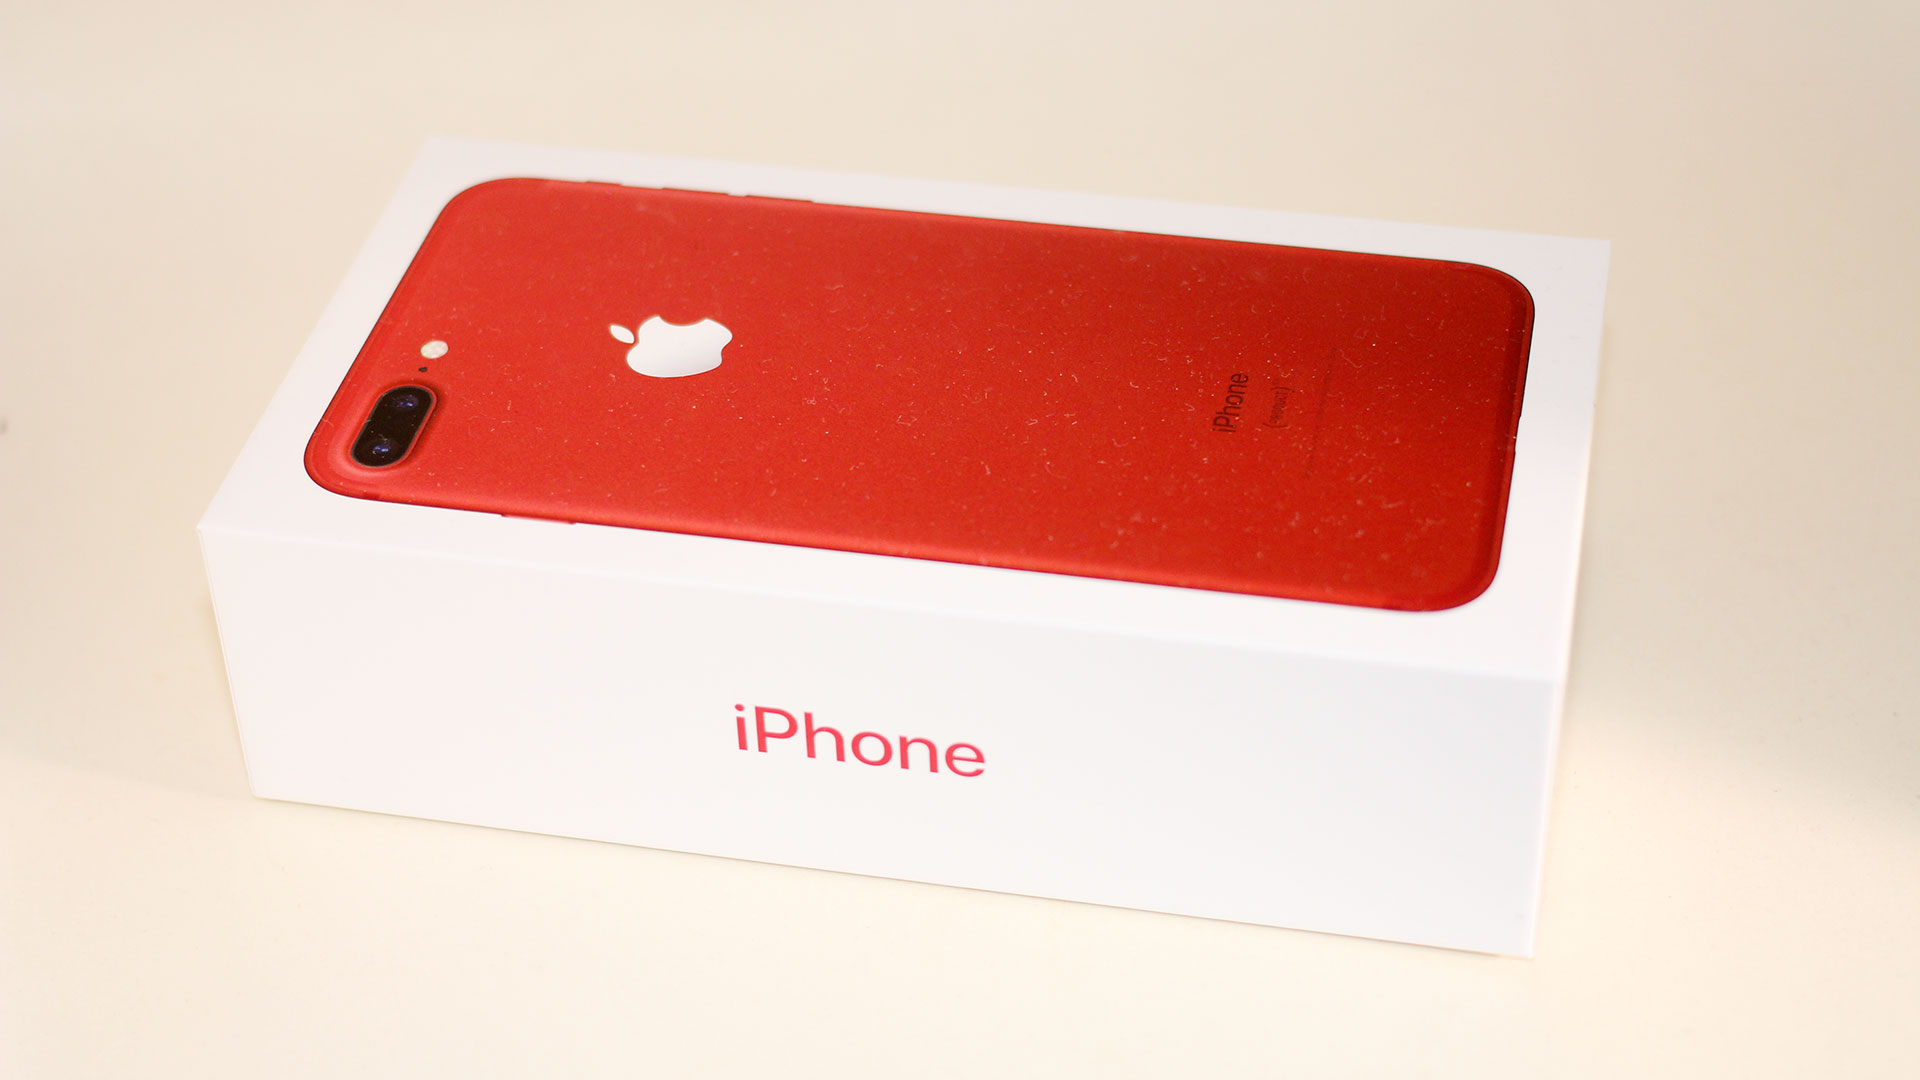 iPhone-7-Plus-Red-Packaging